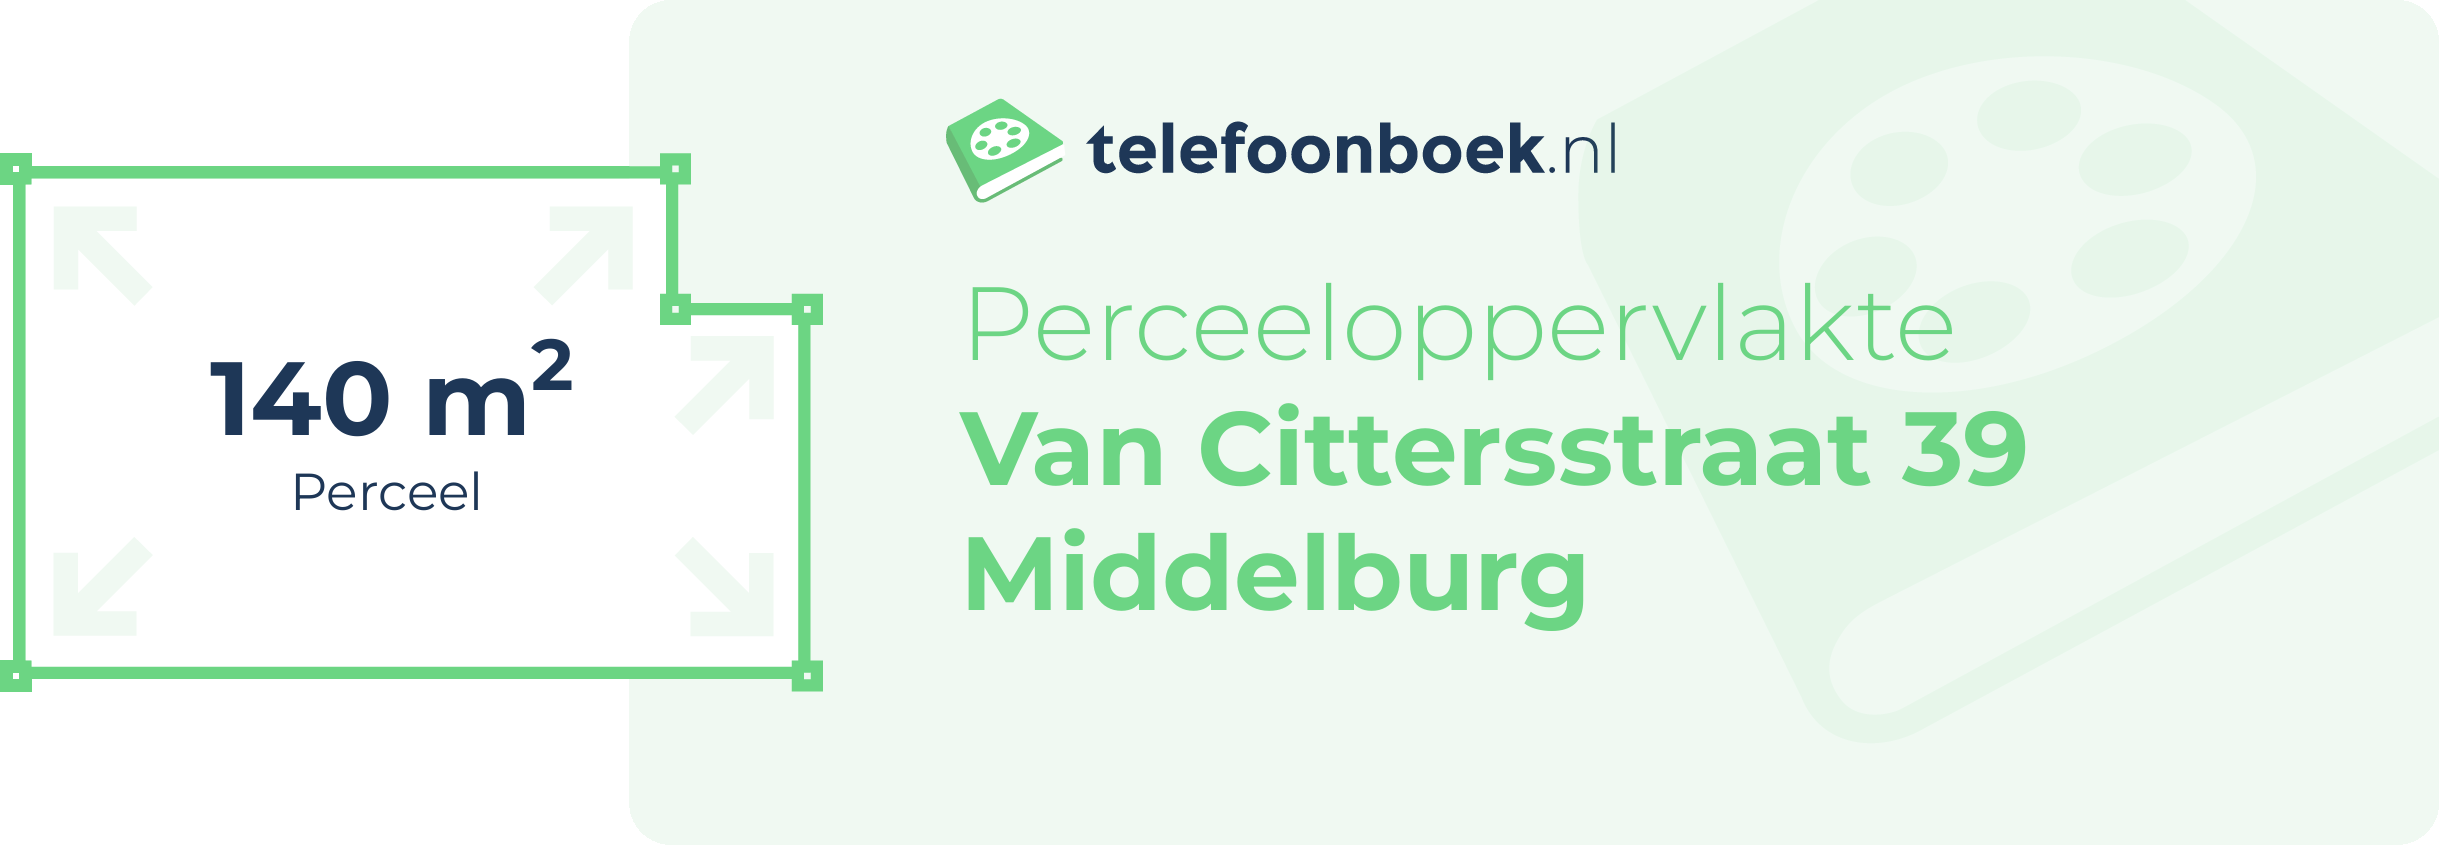 Perceeloppervlakte Van Cittersstraat 39 Middelburg